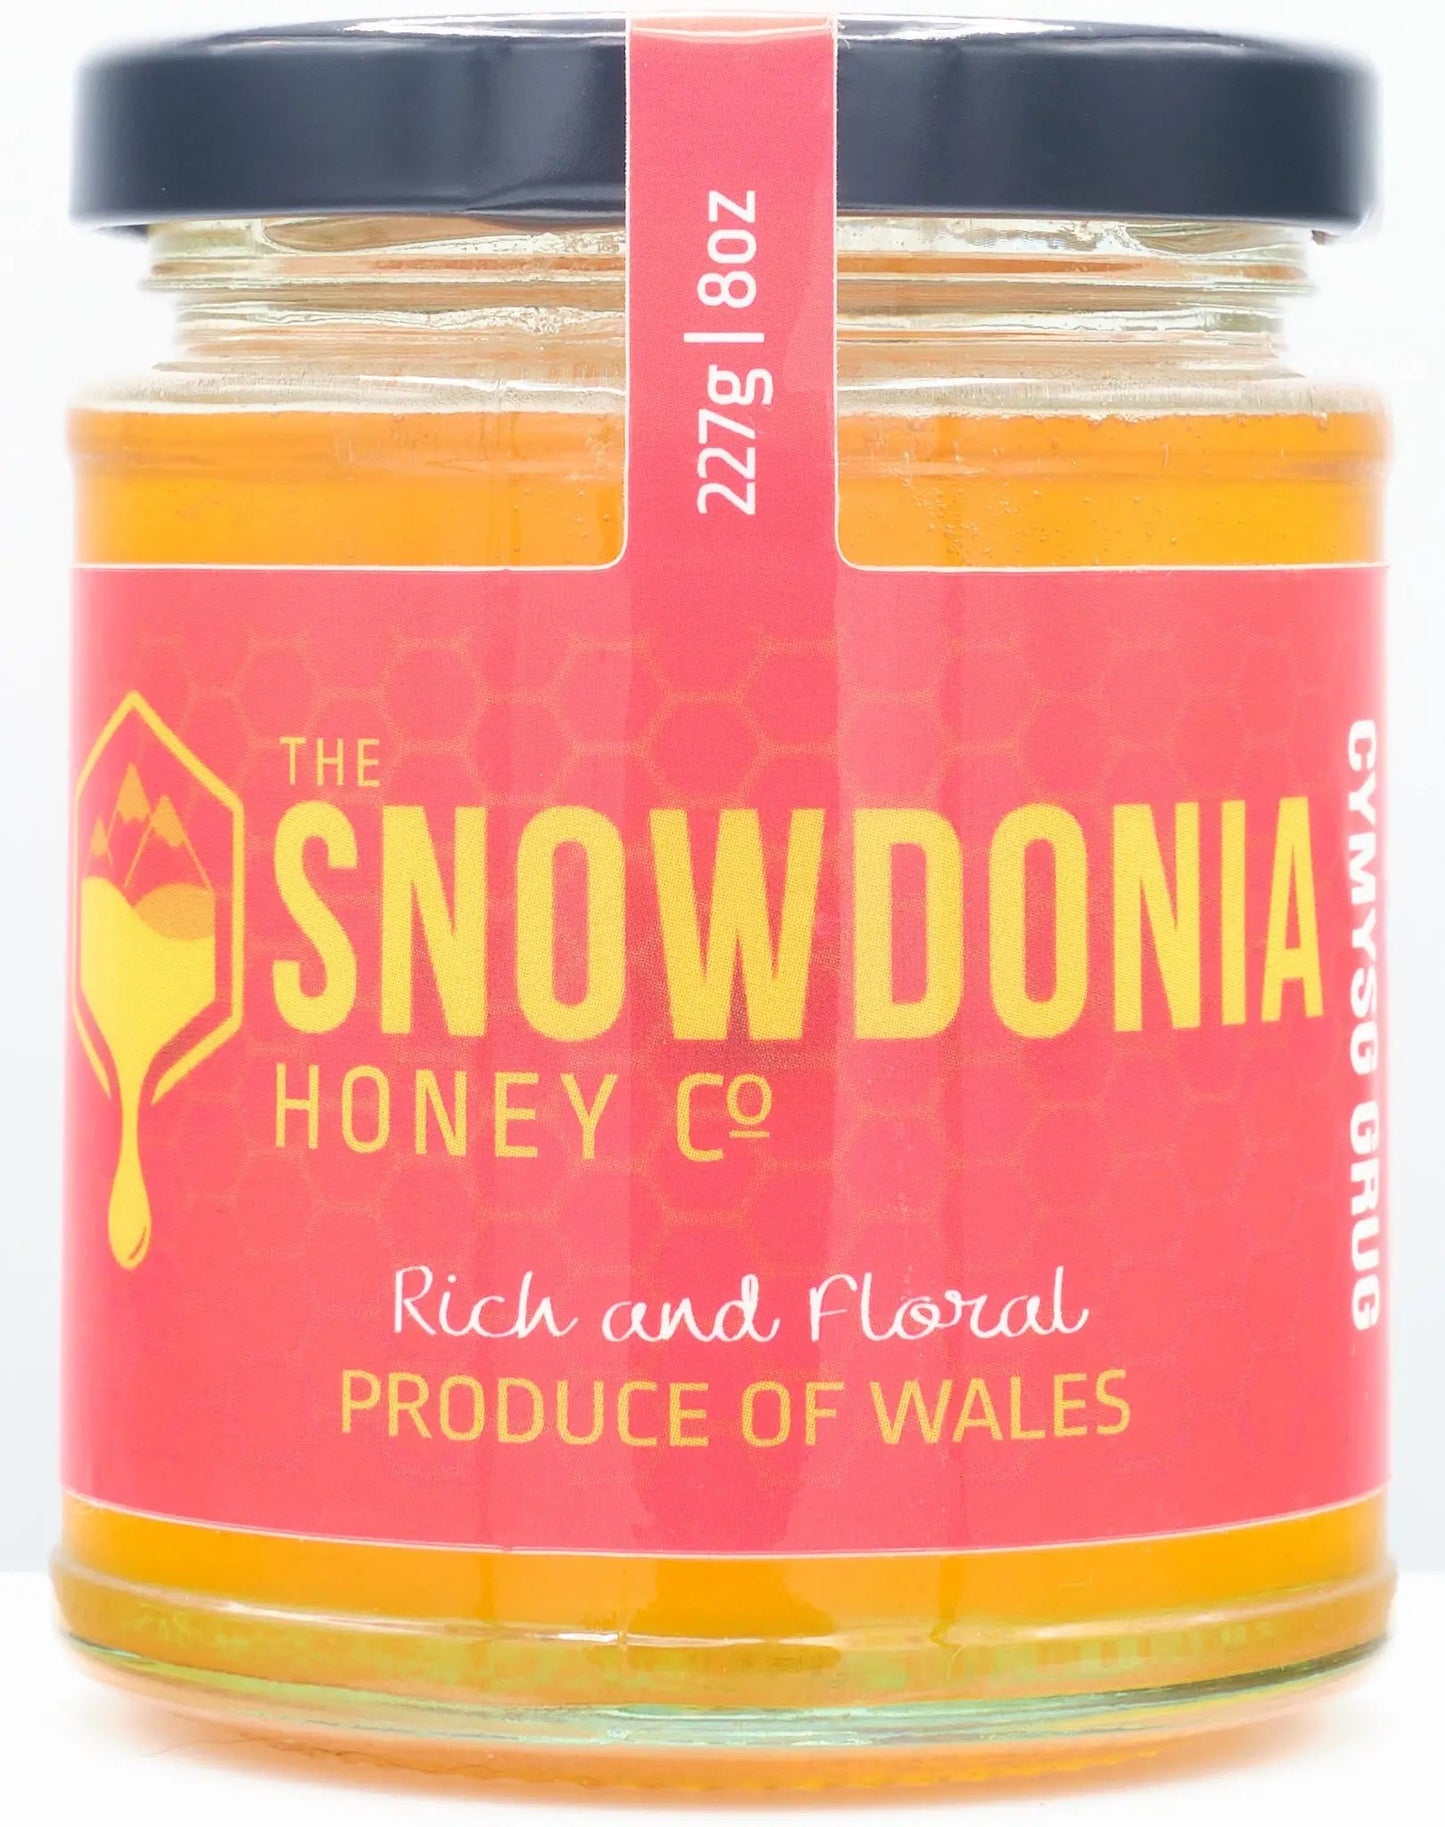 Snowdonia Heather Blend Welsh Honey 227g - The Snowdonia Honey Co.